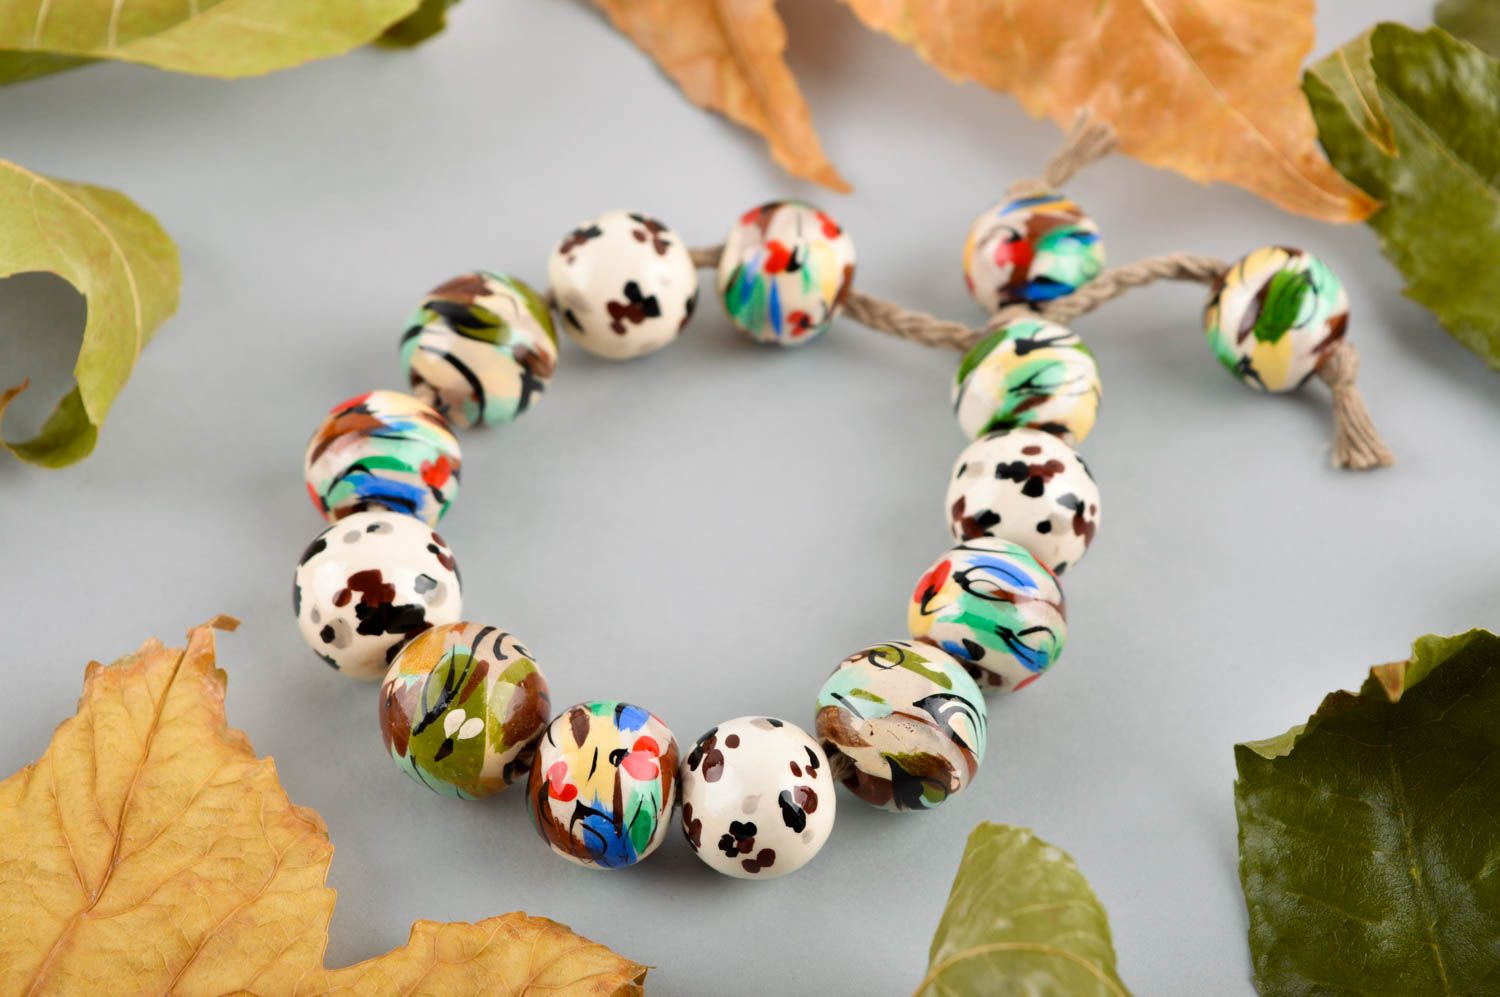 Handmade bracelet bead bracelet unique jewelry ceramic jewelry gifts for girls photo 1